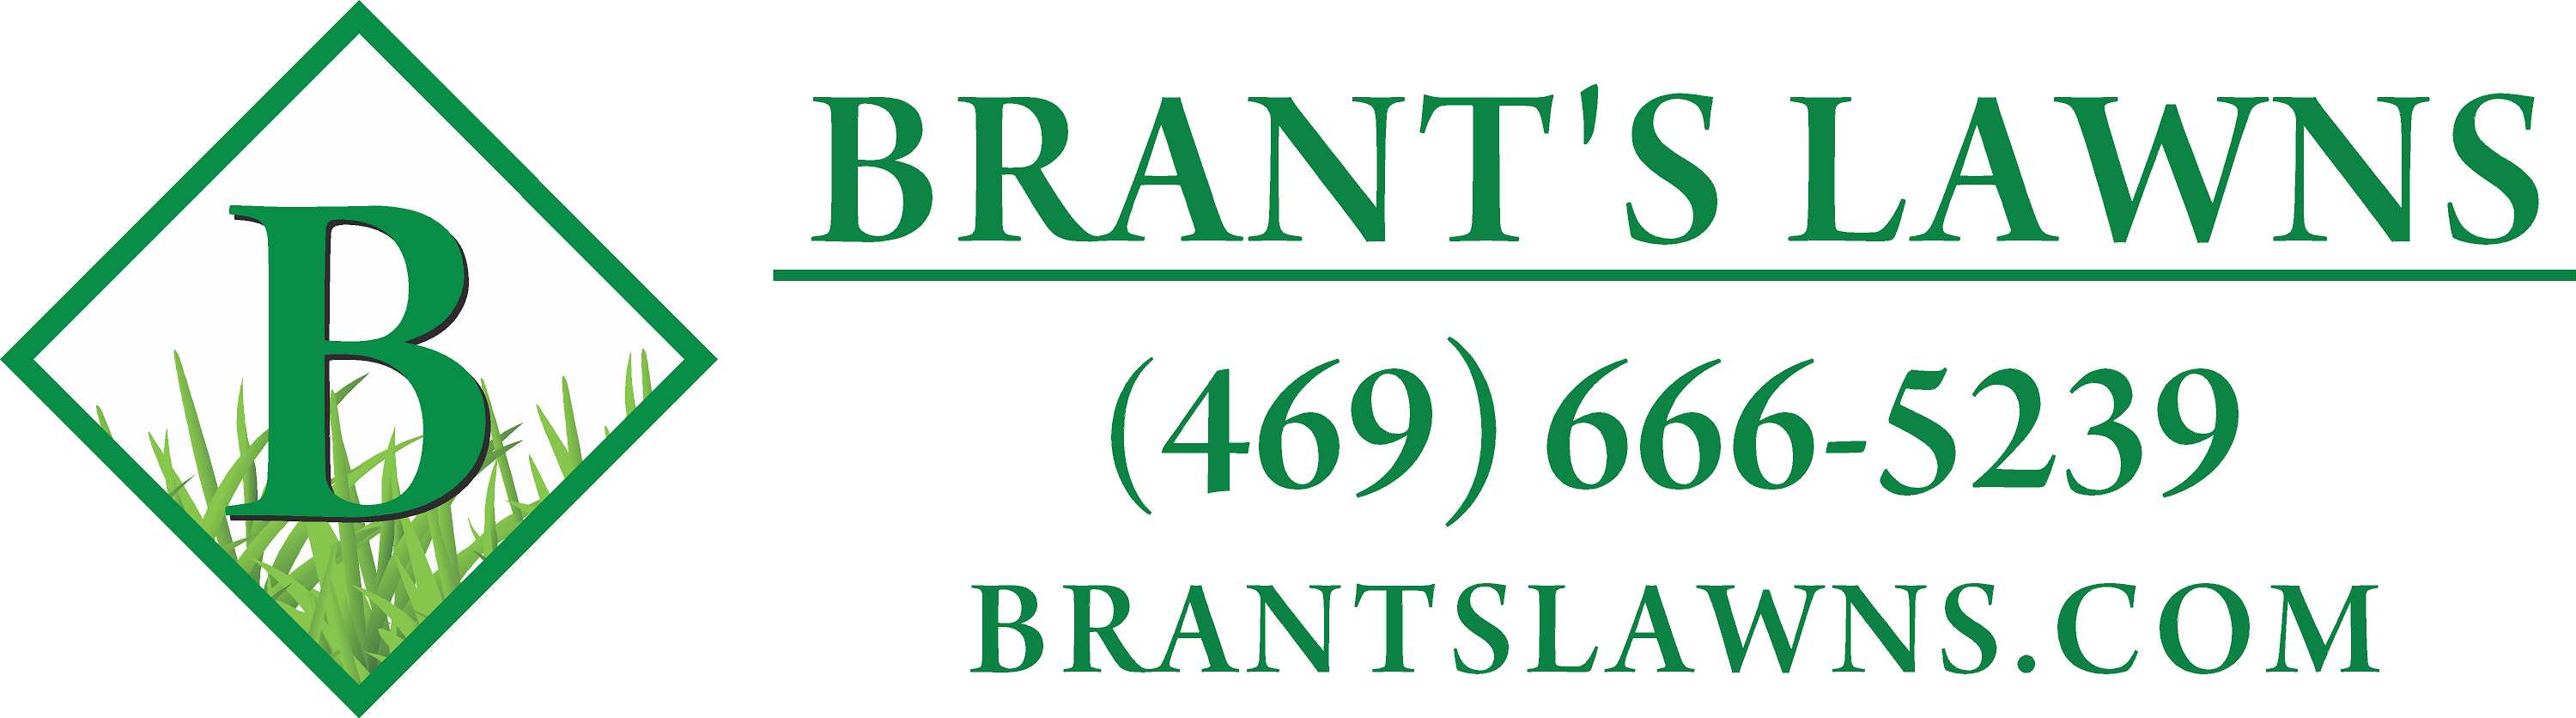 Brant's Lawn Care, LLC Logo